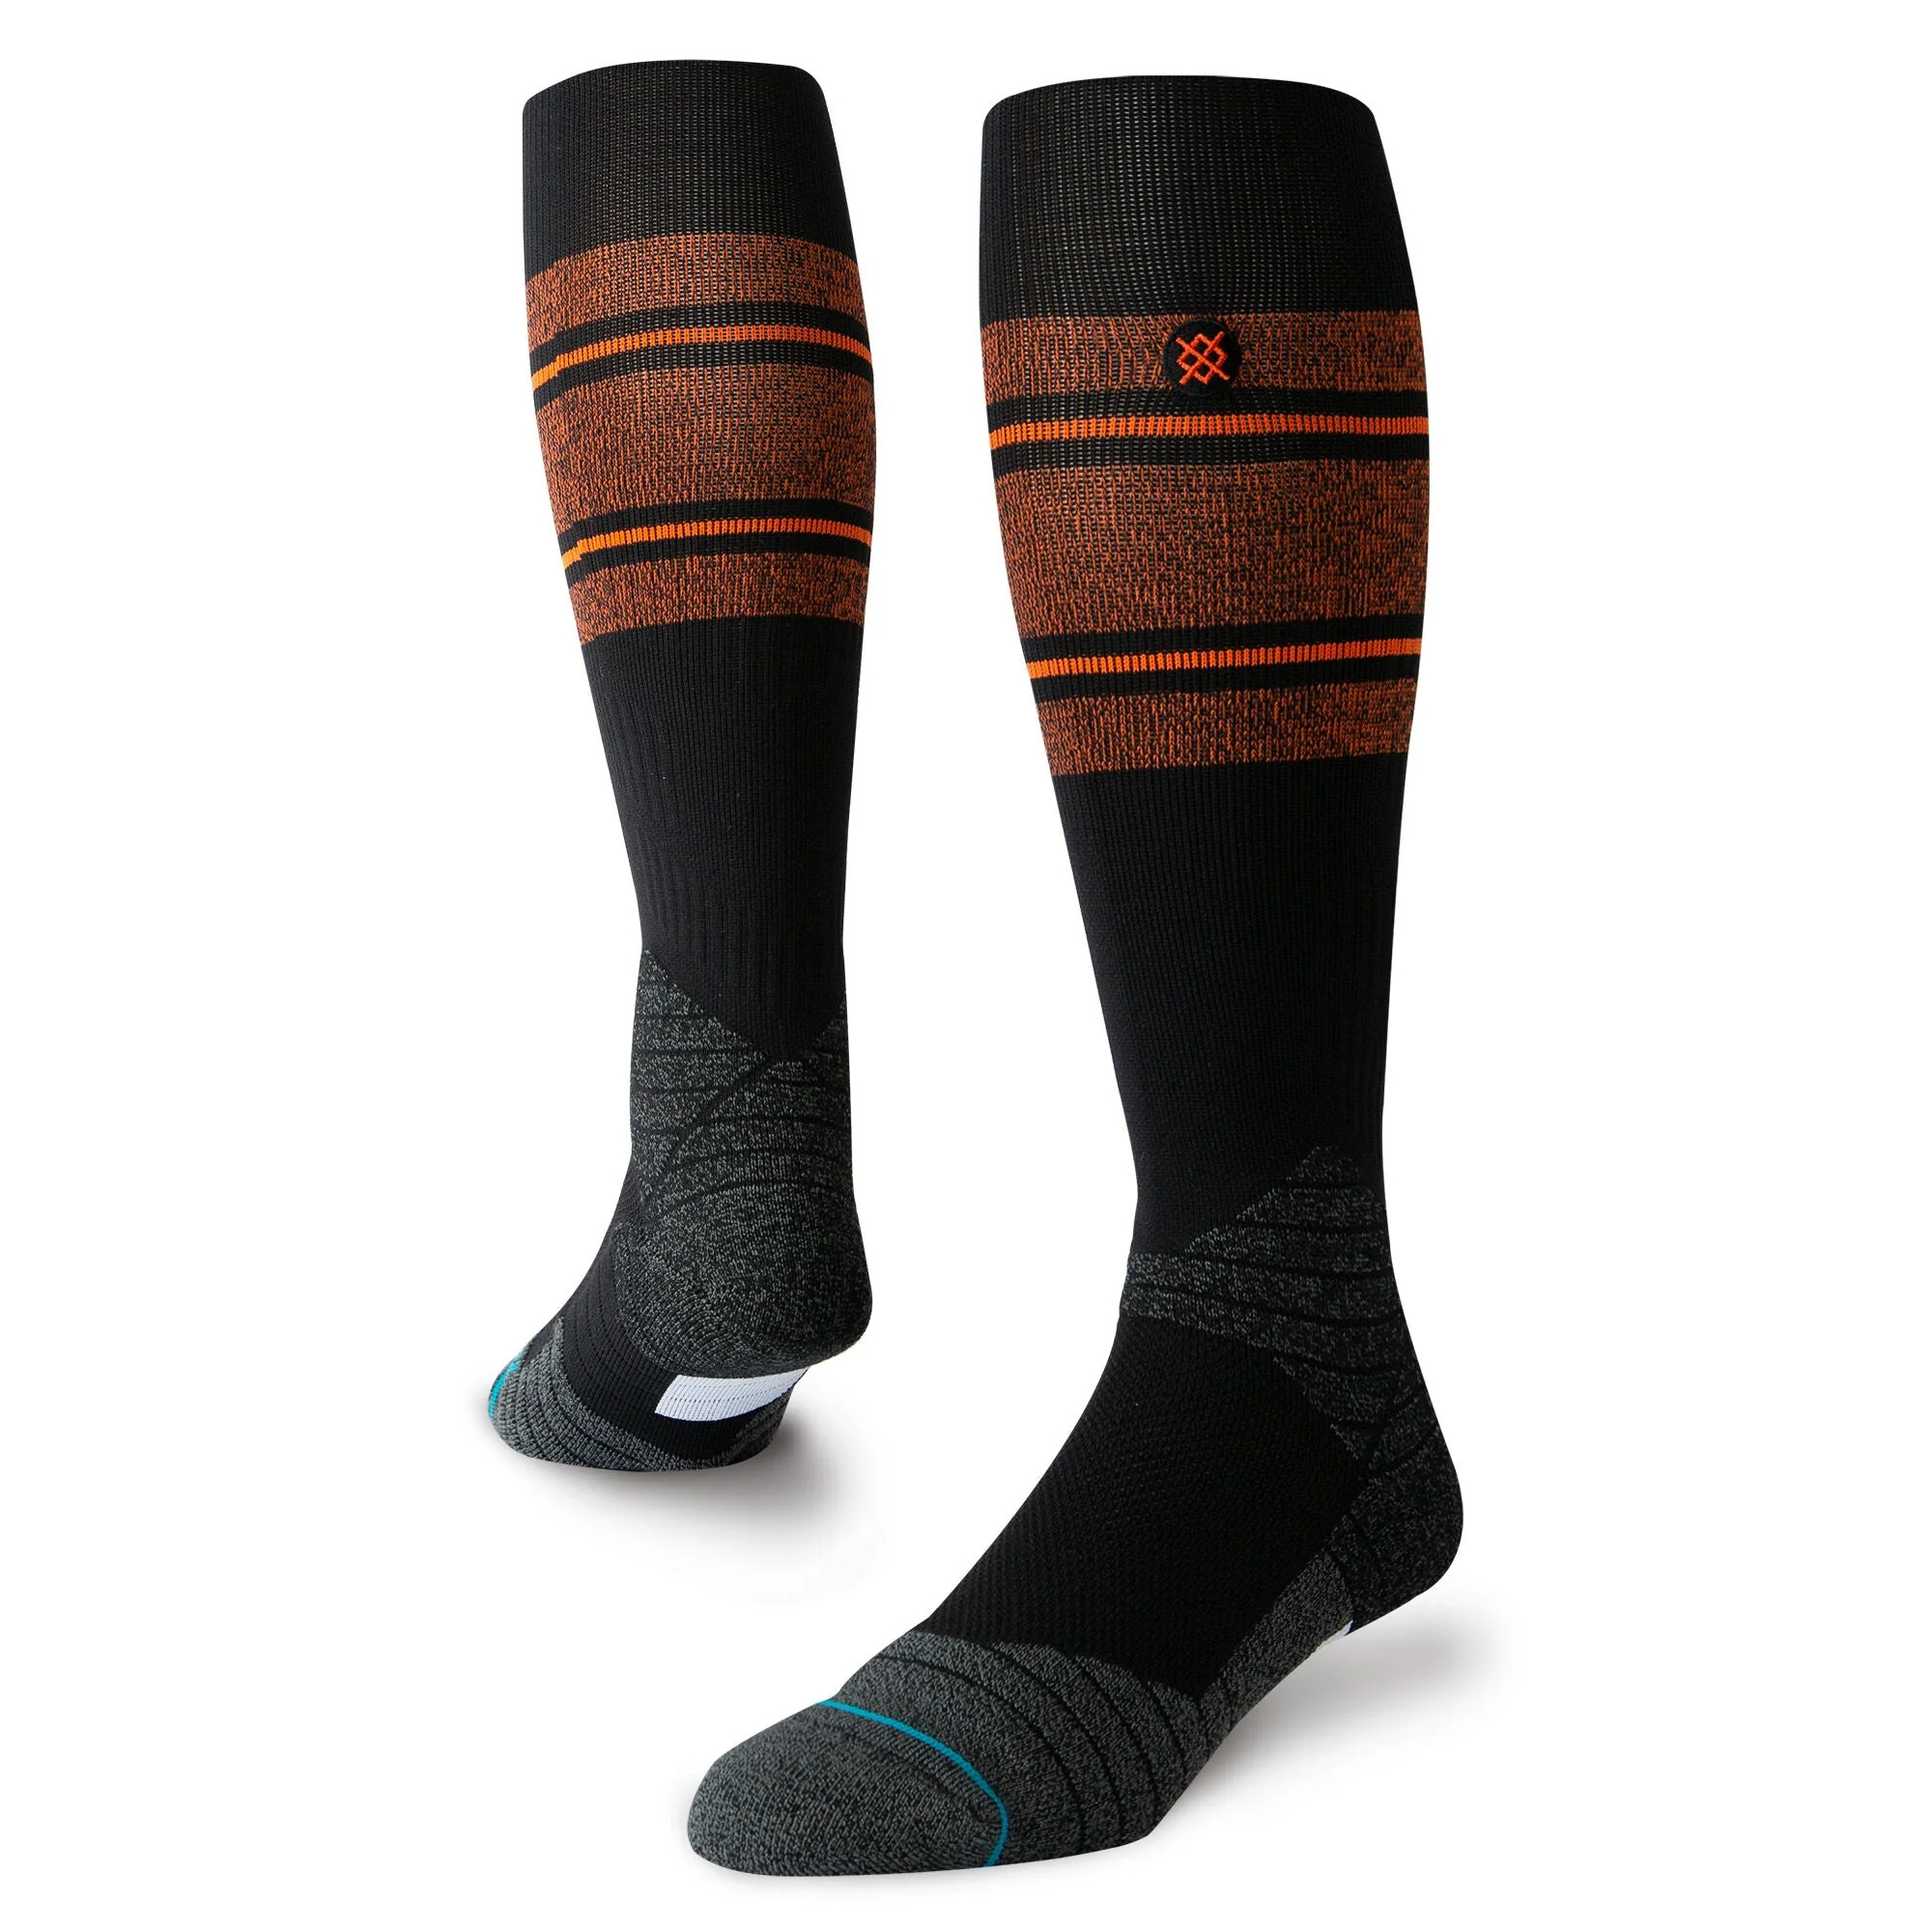 Men's Stance Black/Orange Diamond Pro Stripe OTC Socks - Walmart.com